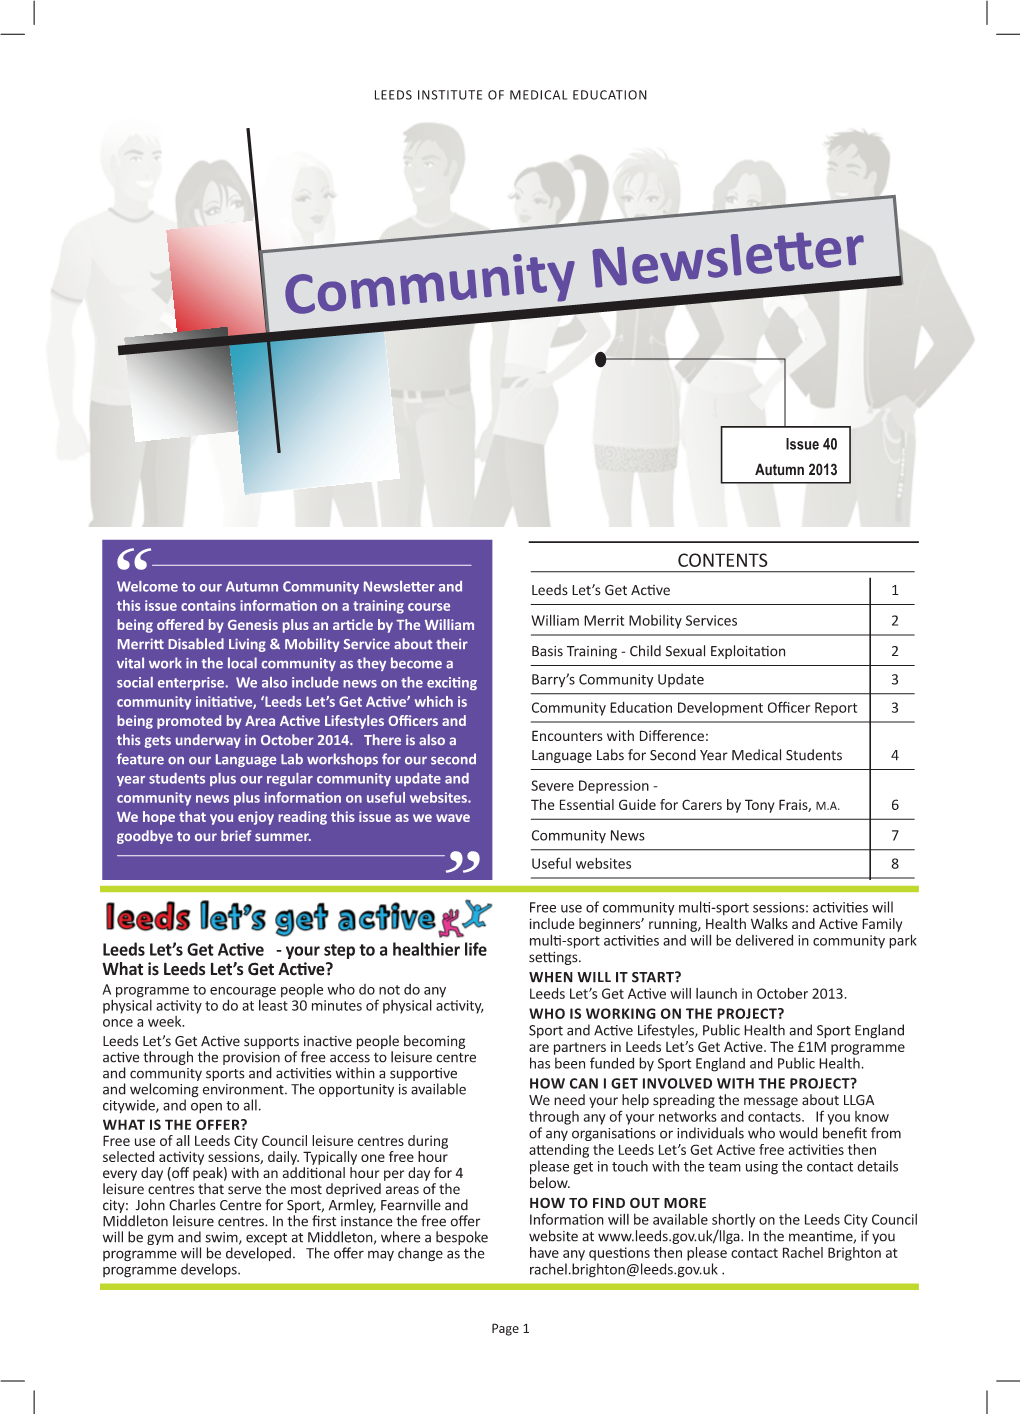 MEU Community Newsletter Issue 40